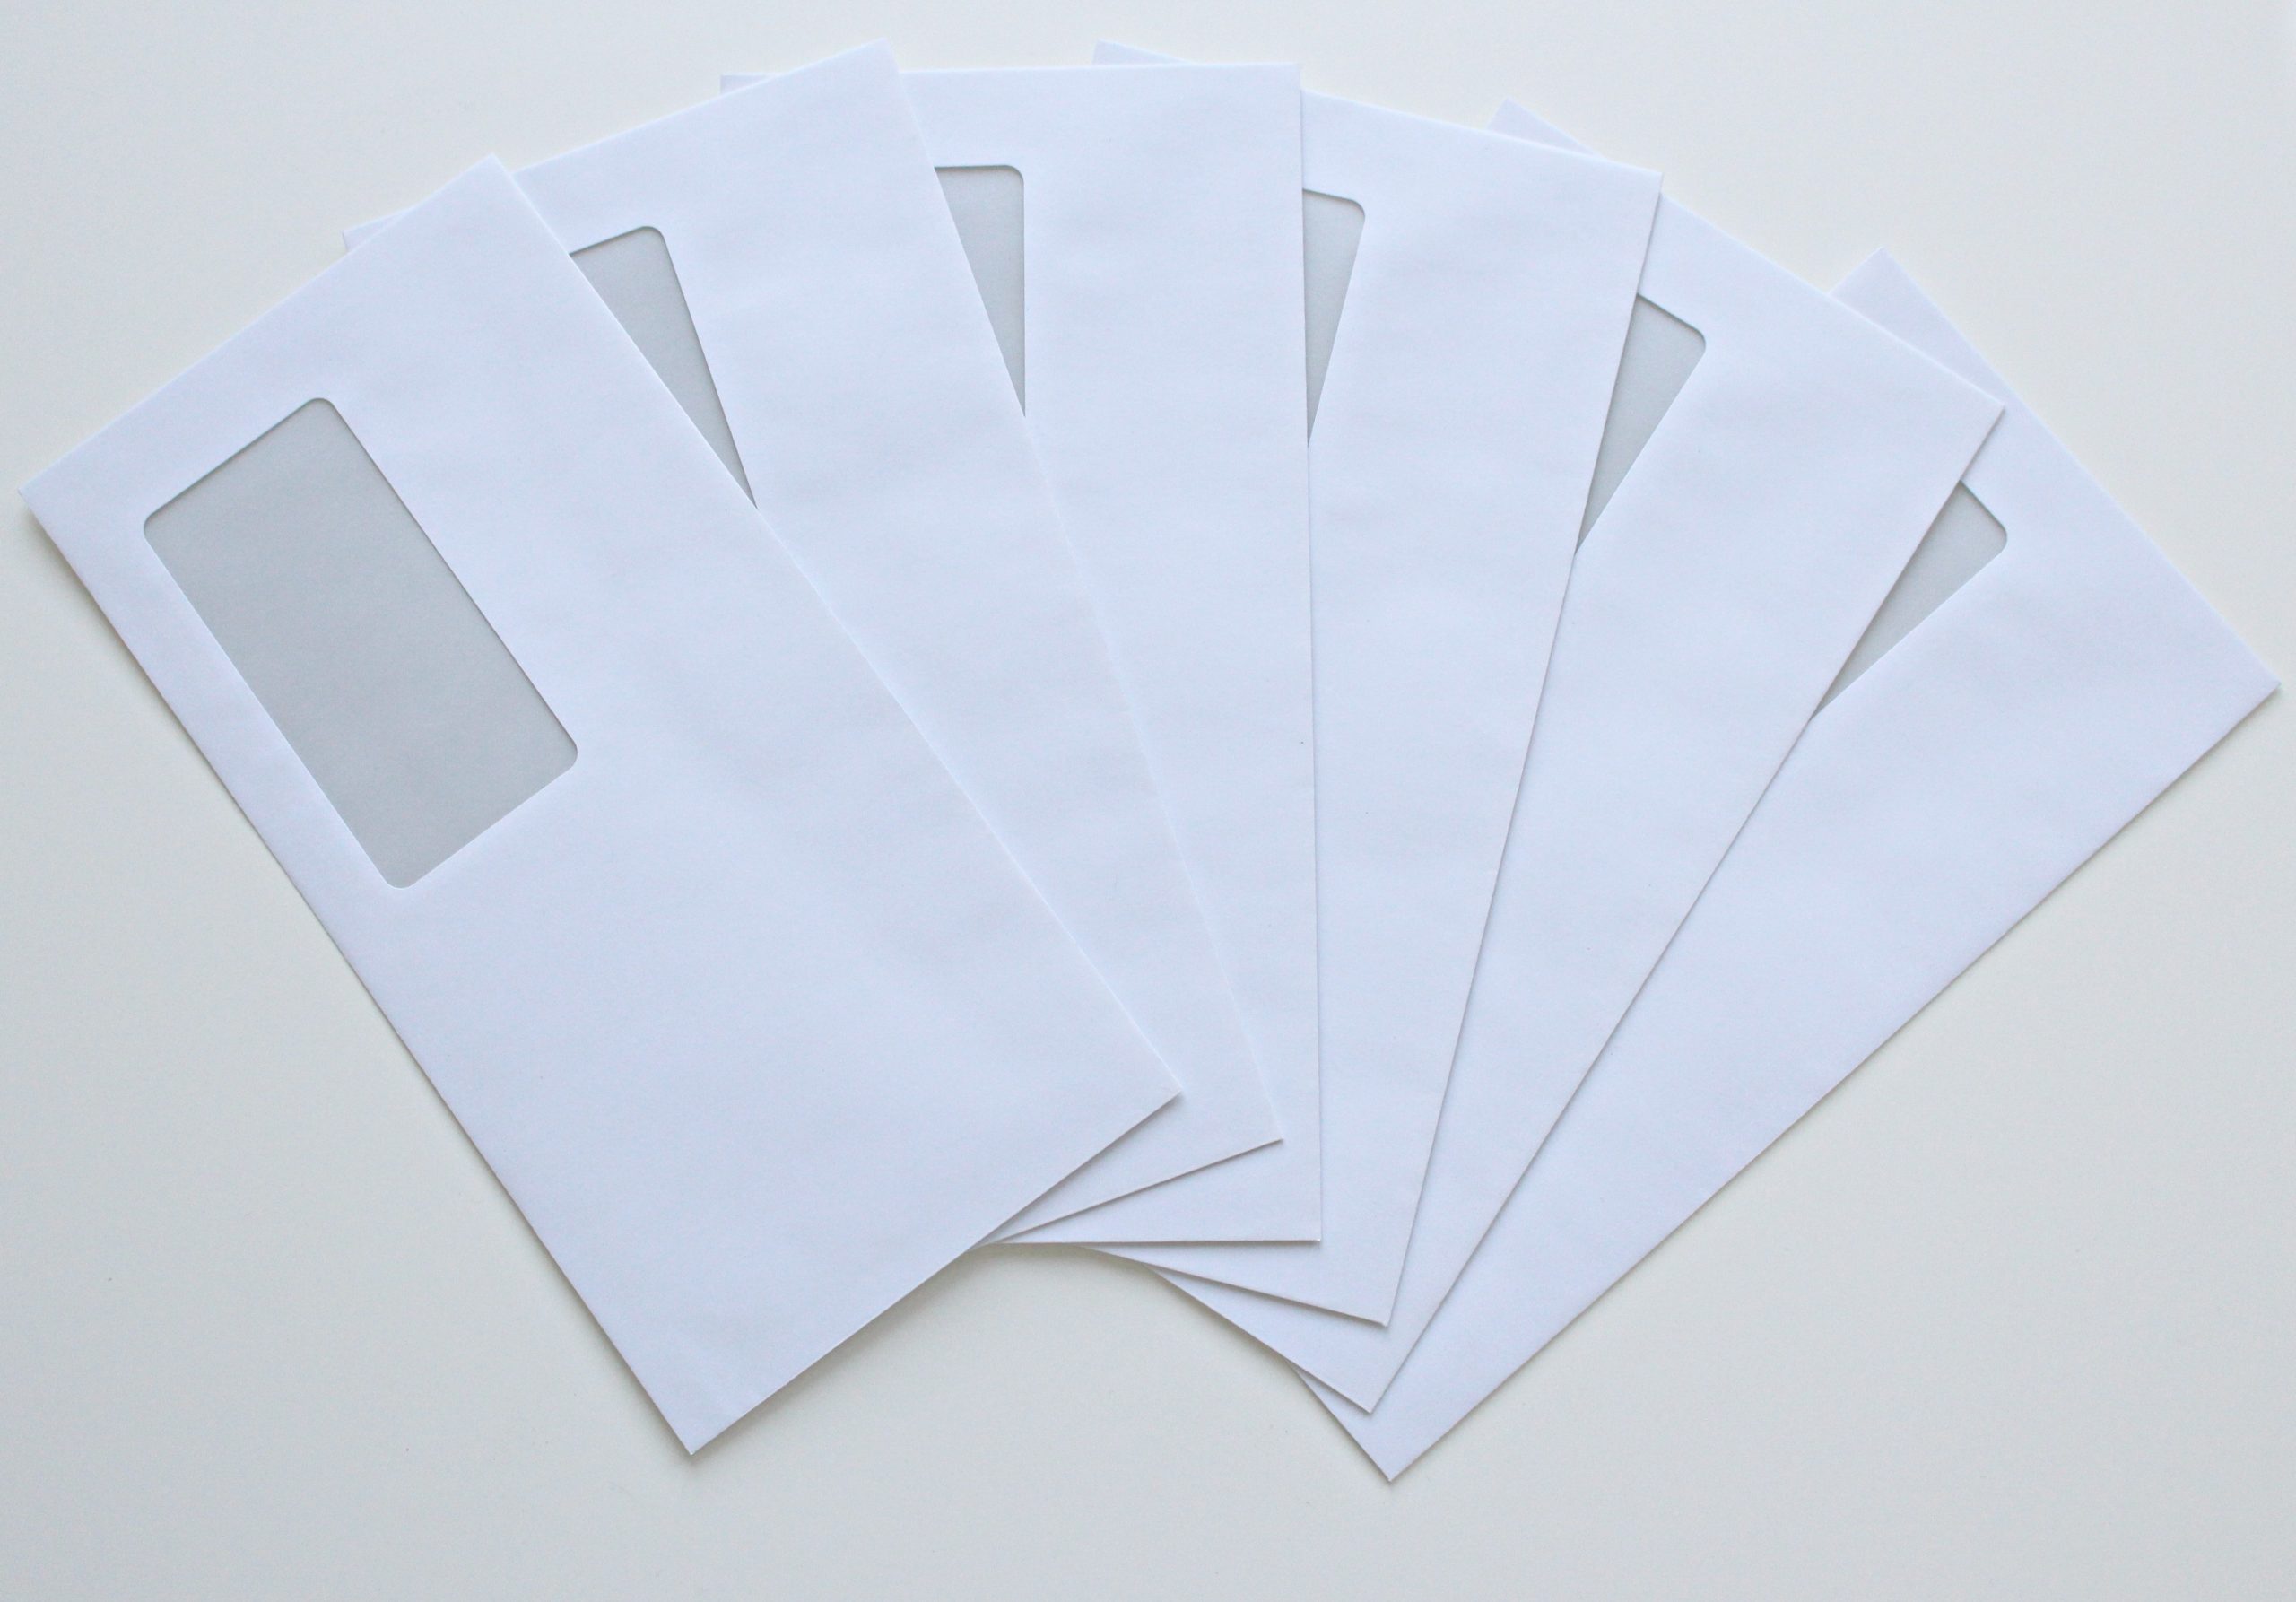 A pile of envelopes